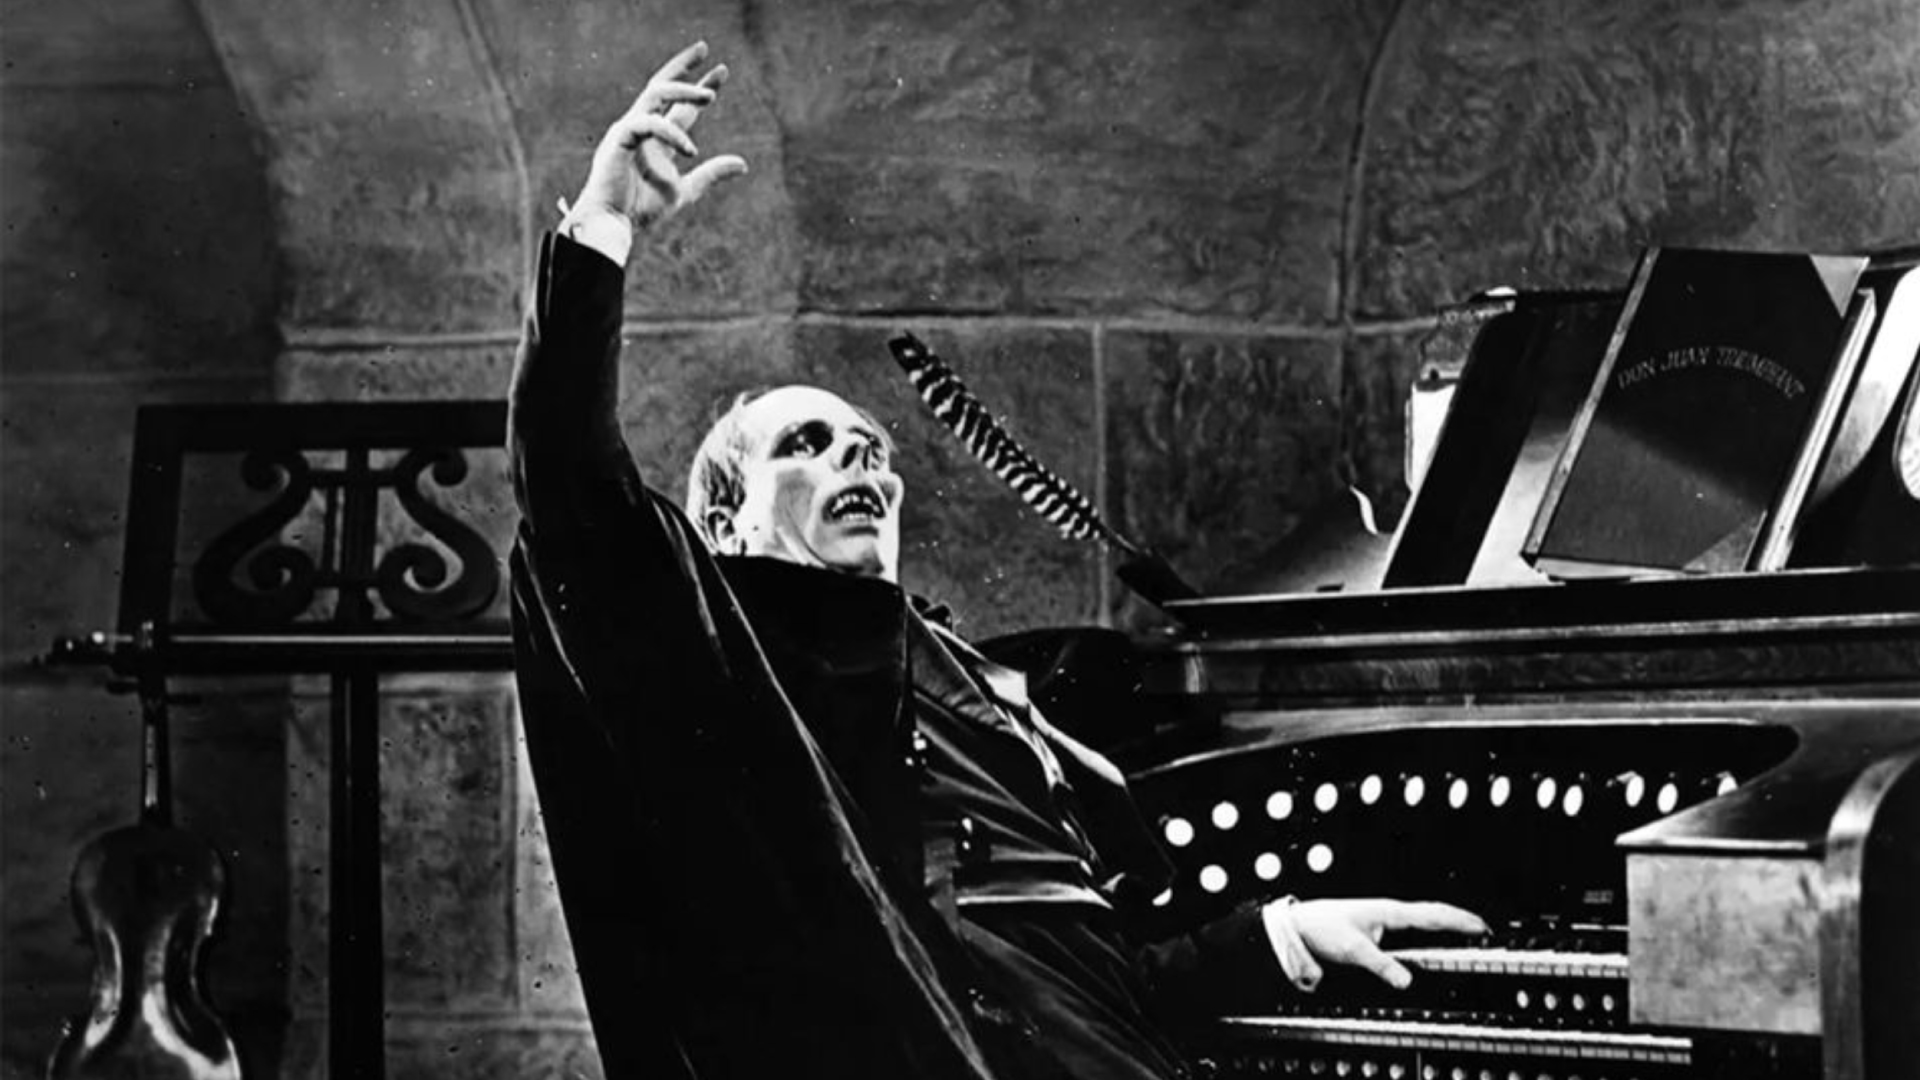 Phantom of the opera at Walt Disney Concert Hall